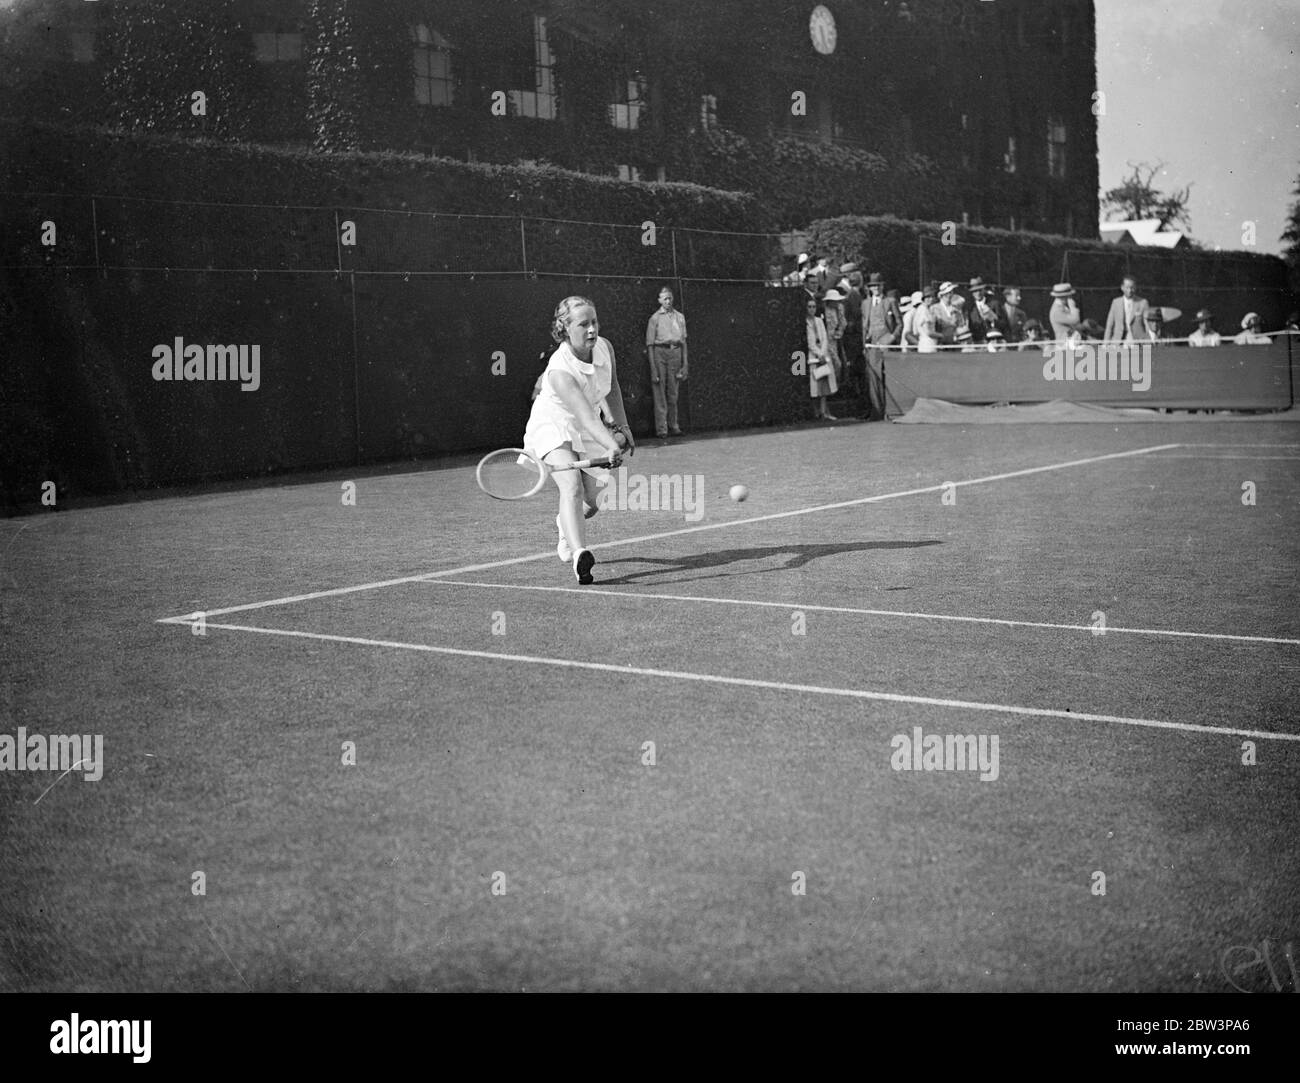 Billie Yorke nei Campionati di Wimbledon . Spettacoli fotografici : Adeline Billie Yorke in gioco . Giu 1936 Foto Stock